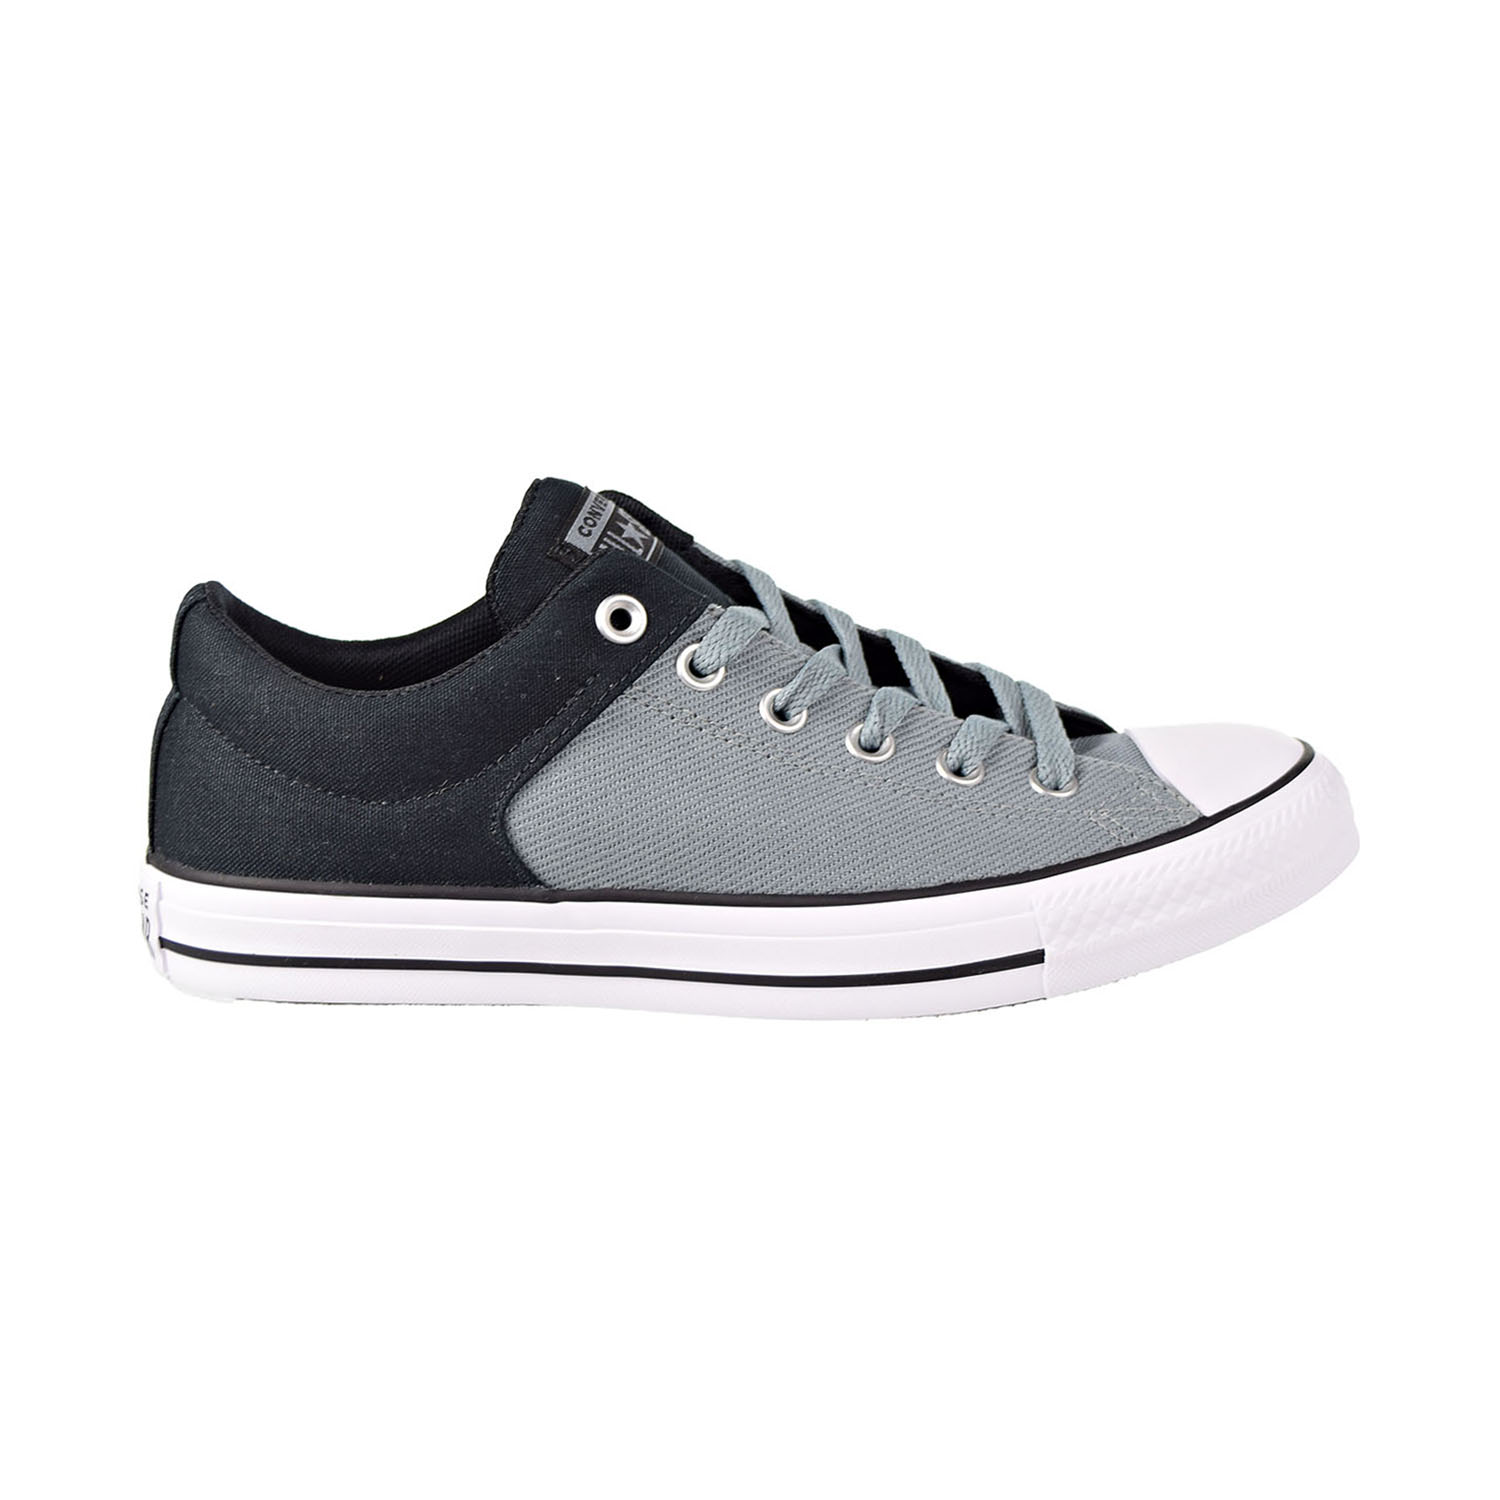 Converse Chuck Taylor All Star High Street Ox Big Kids/Men's Shoes Black/Grey  163217f